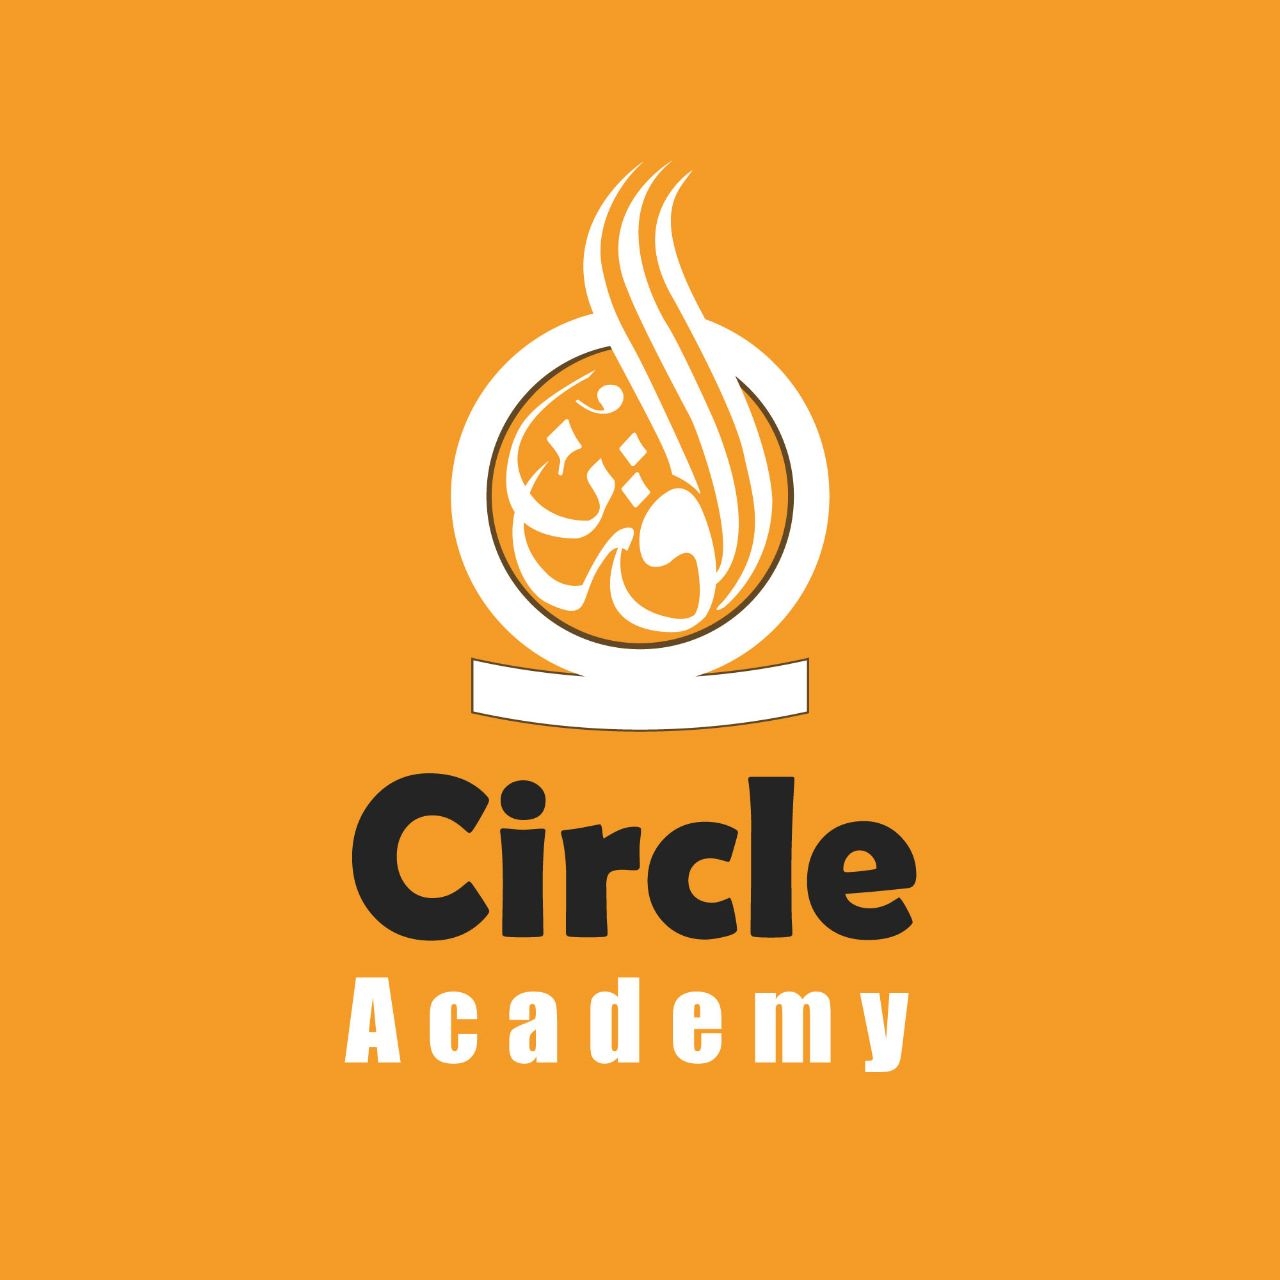 Circle of Quran